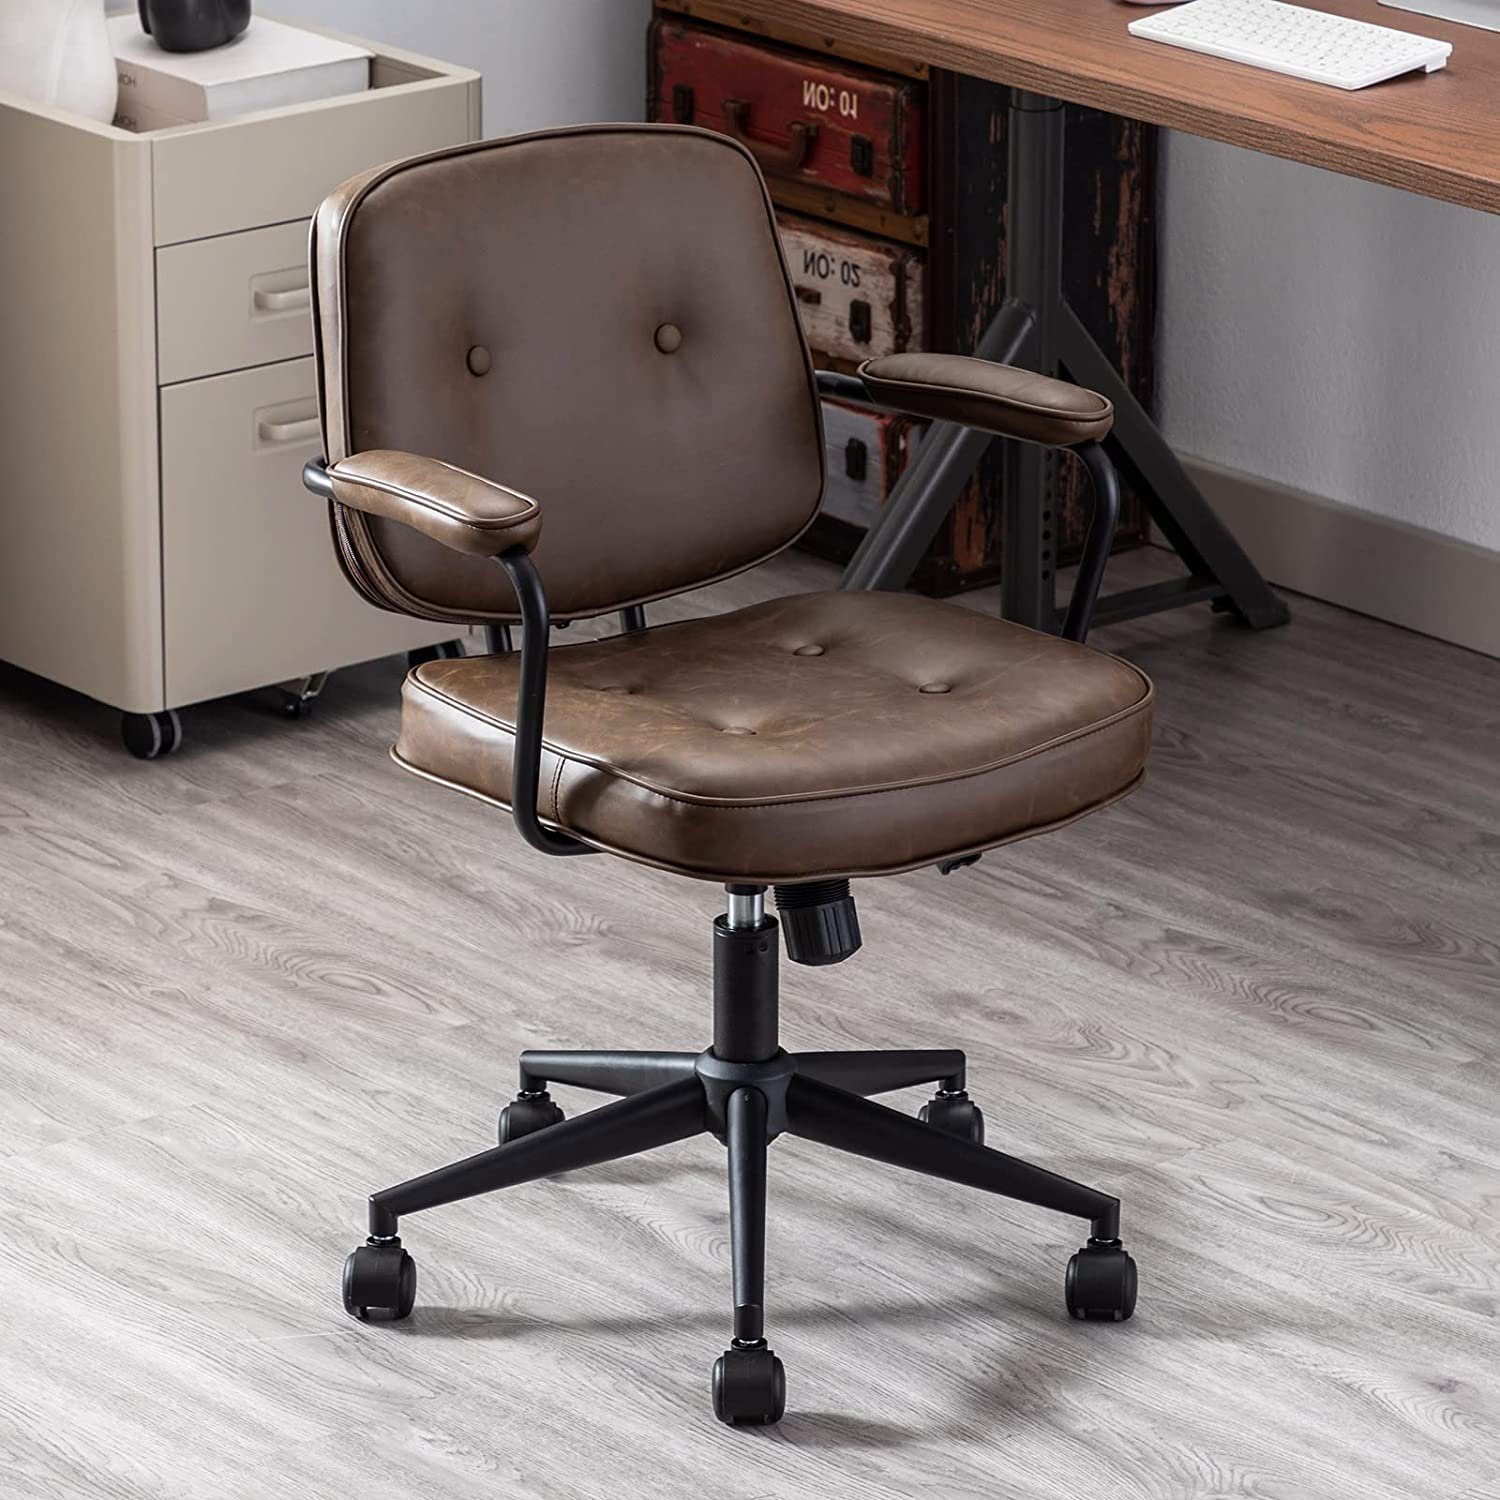 WAHSON OFFICE CHAIRS Bürostuhl Ledbezug Schreibtischstuhl höhenverstellbar Braun